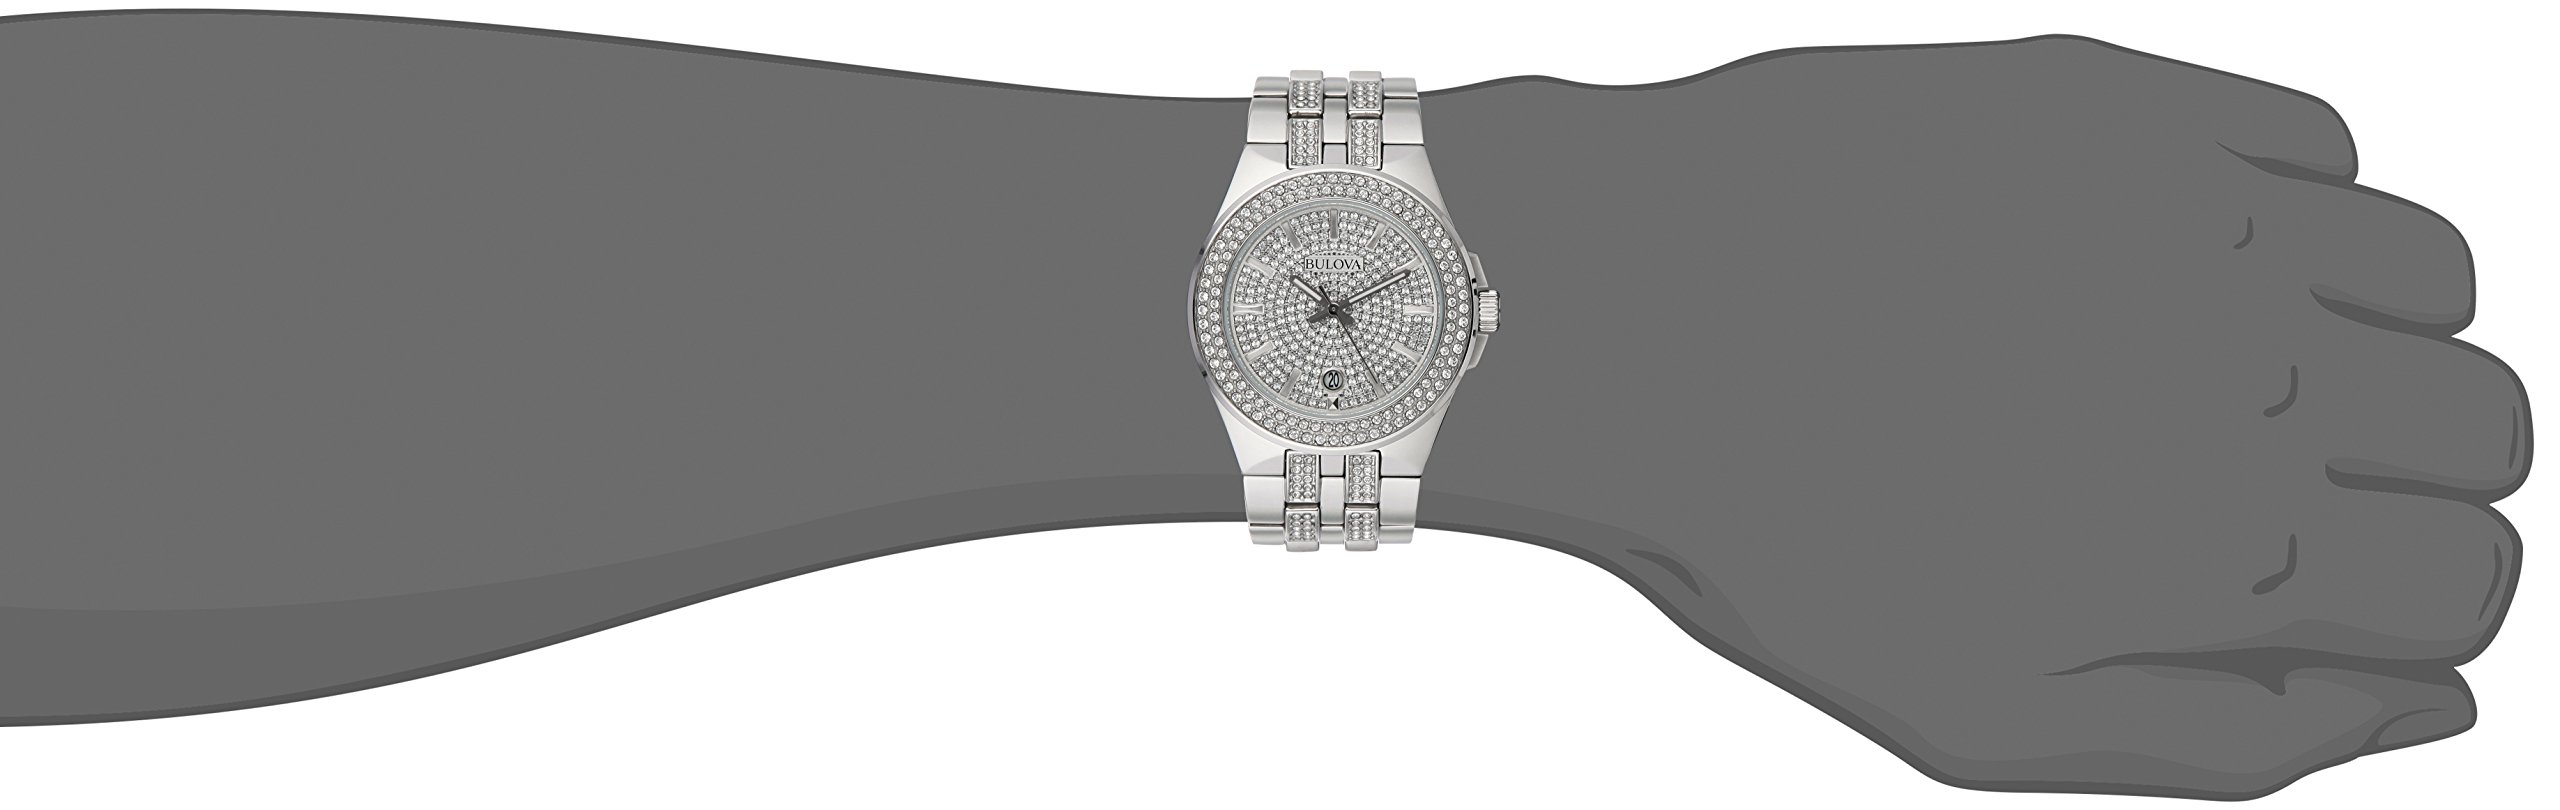 Bulova Men's Crystals Stainless Steel 3-Hand Quartz Watch Style: 96B235